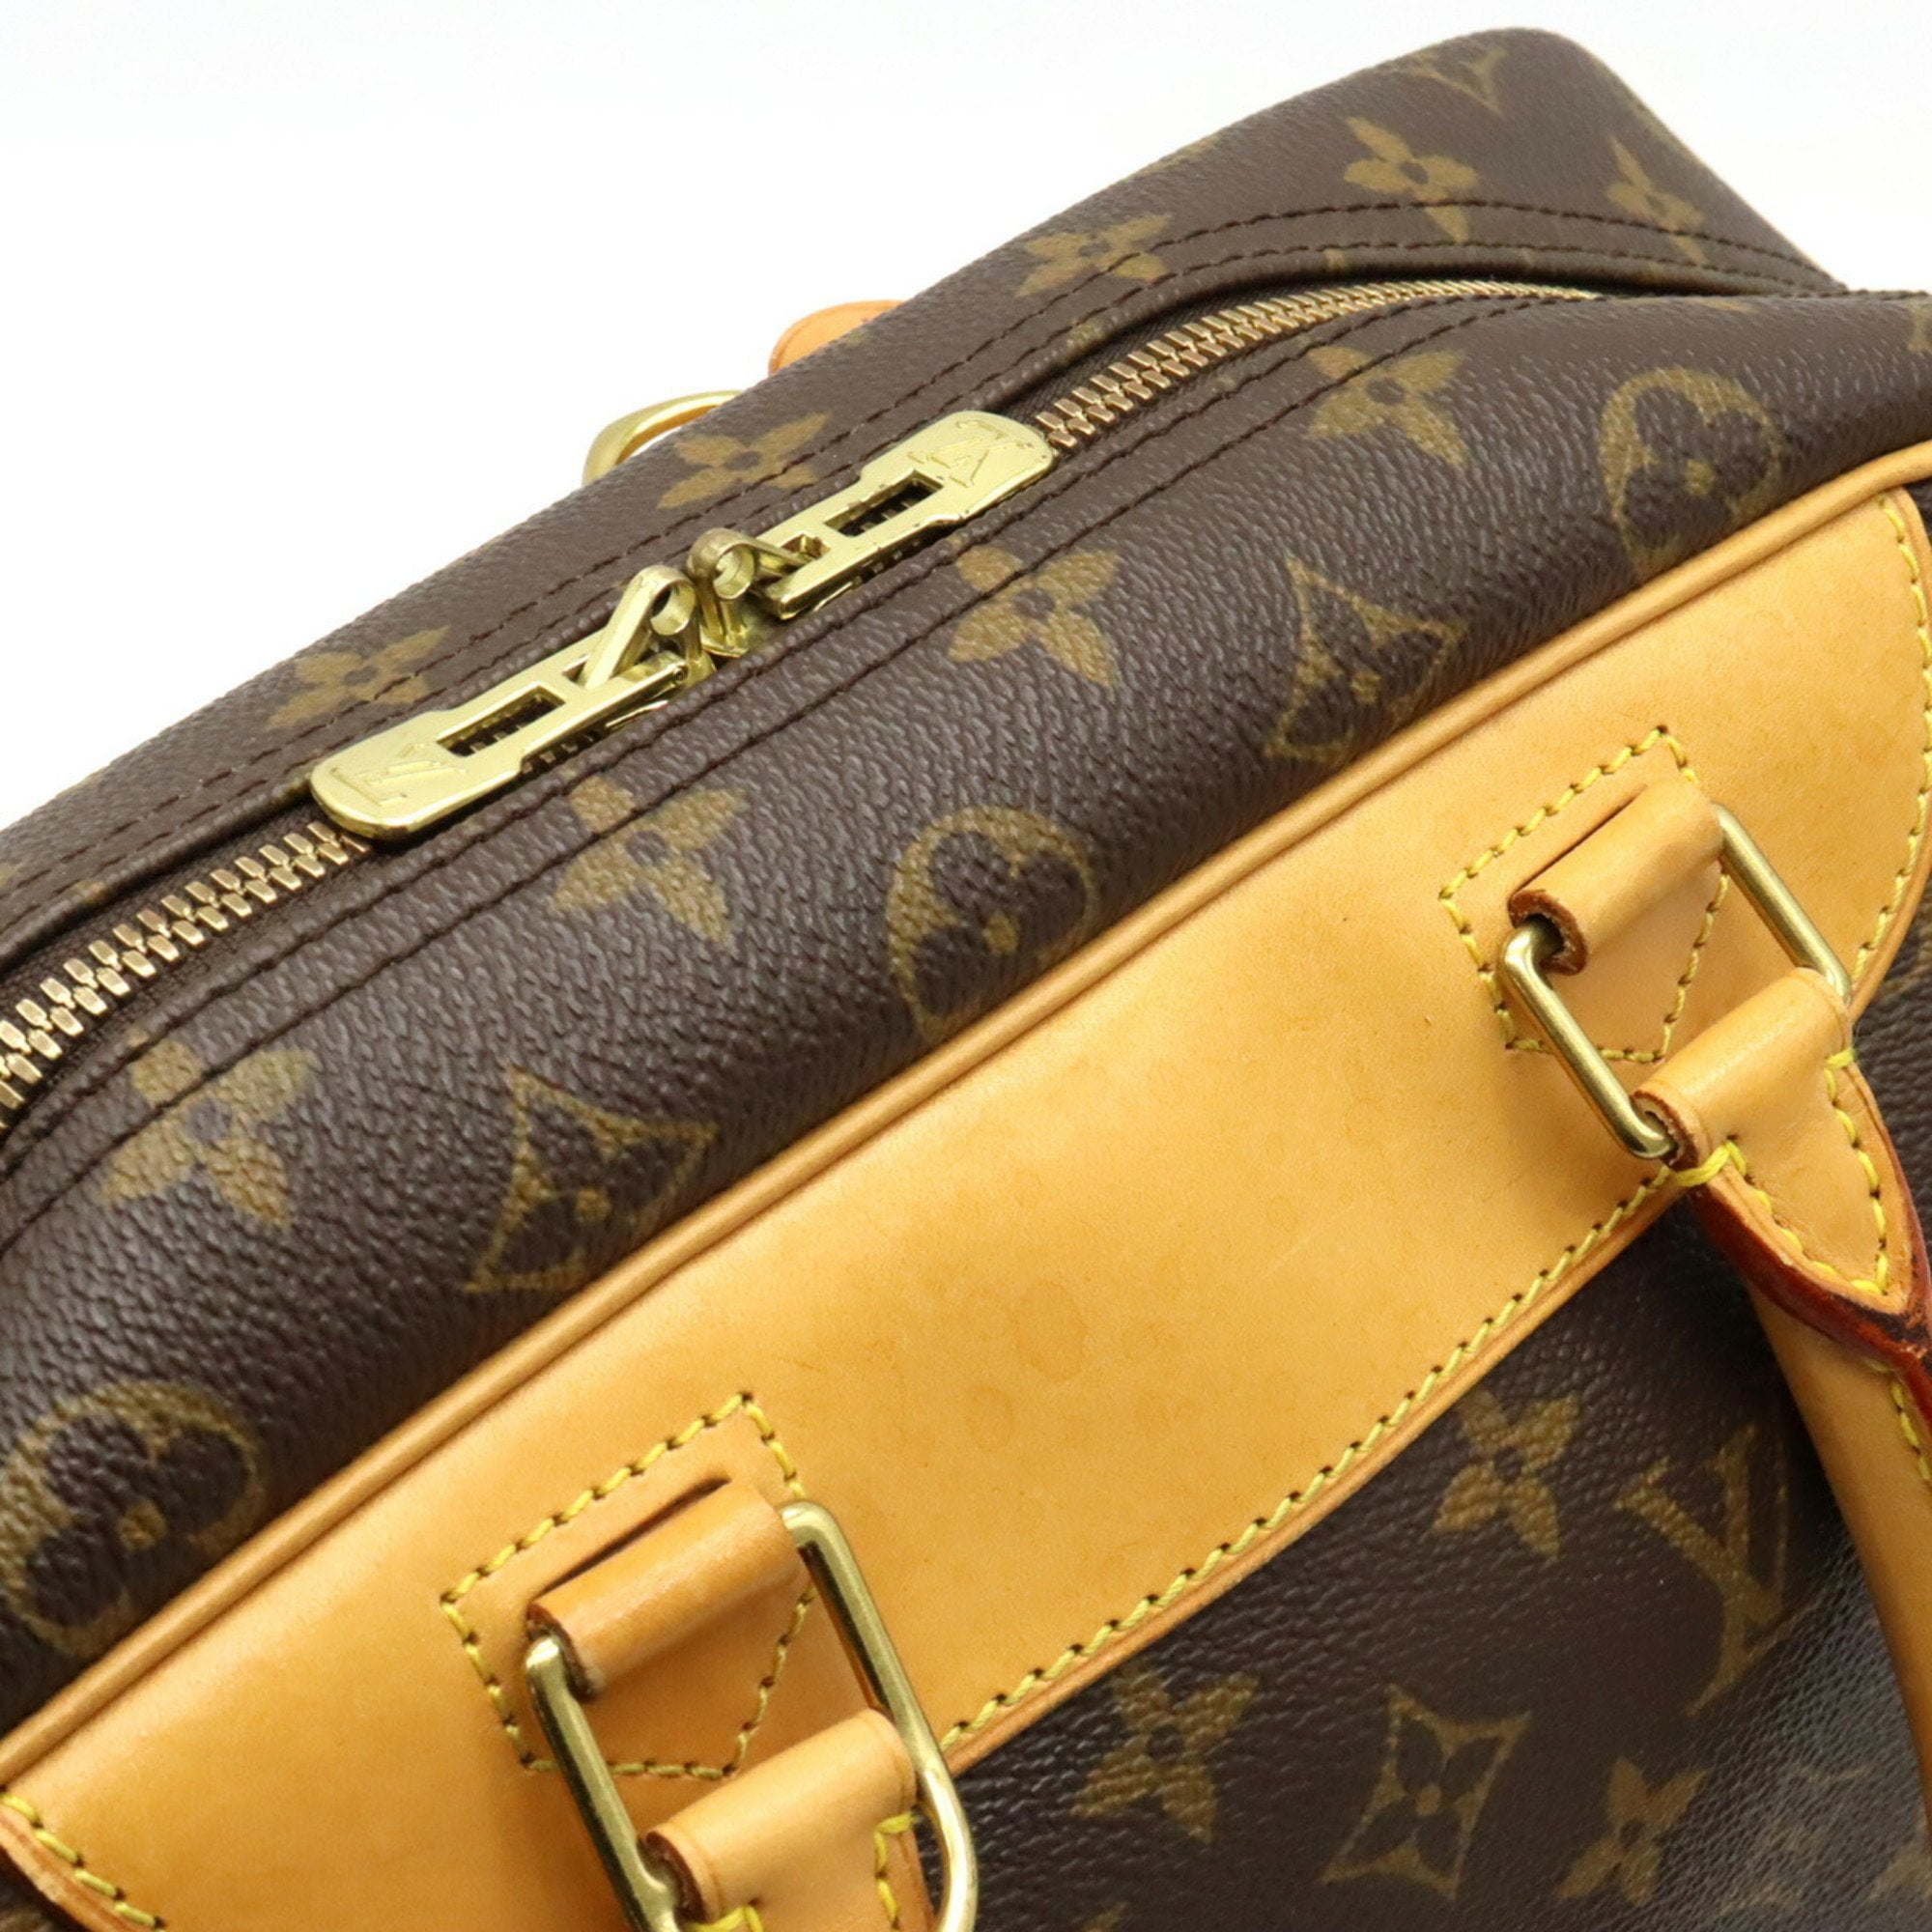 Buy [Bag] LOUIS VUITTON Louis Vuitton Monogram Bowling Vanity Deauville  Handbag Mini Boston Bag Travel Bag M47270 from Japan - Buy authentic Plus  exclusive items from Japan